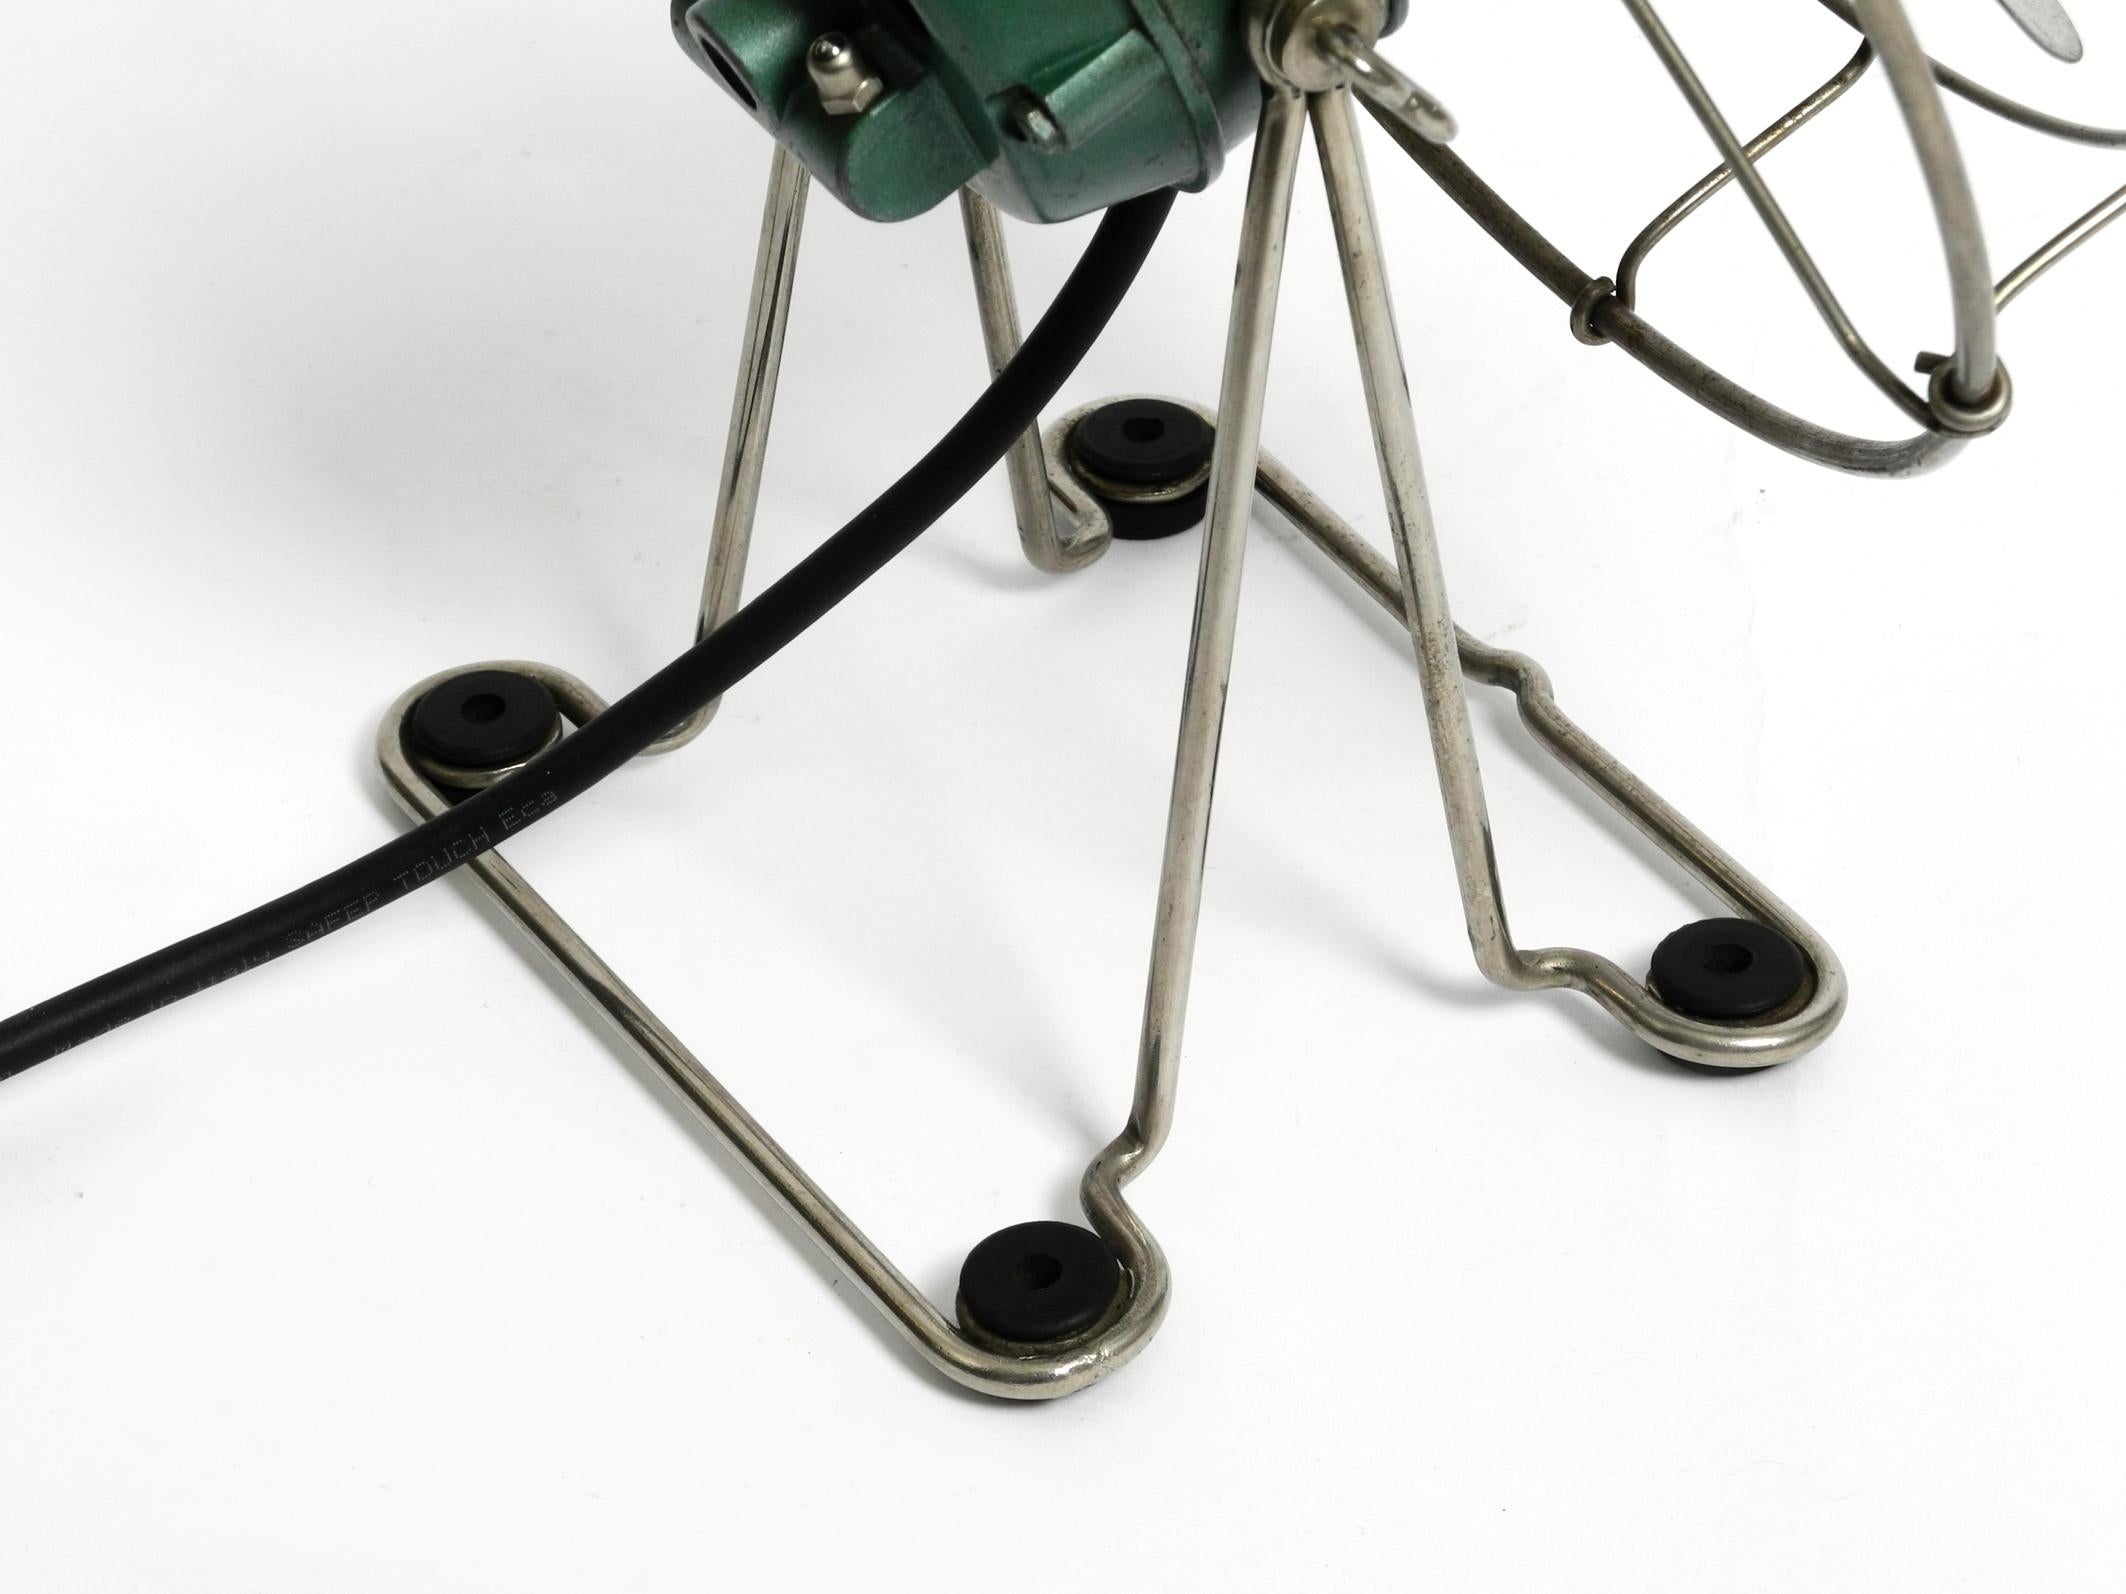 Original Mid Century Industrial Design Table Fan from Maico 1